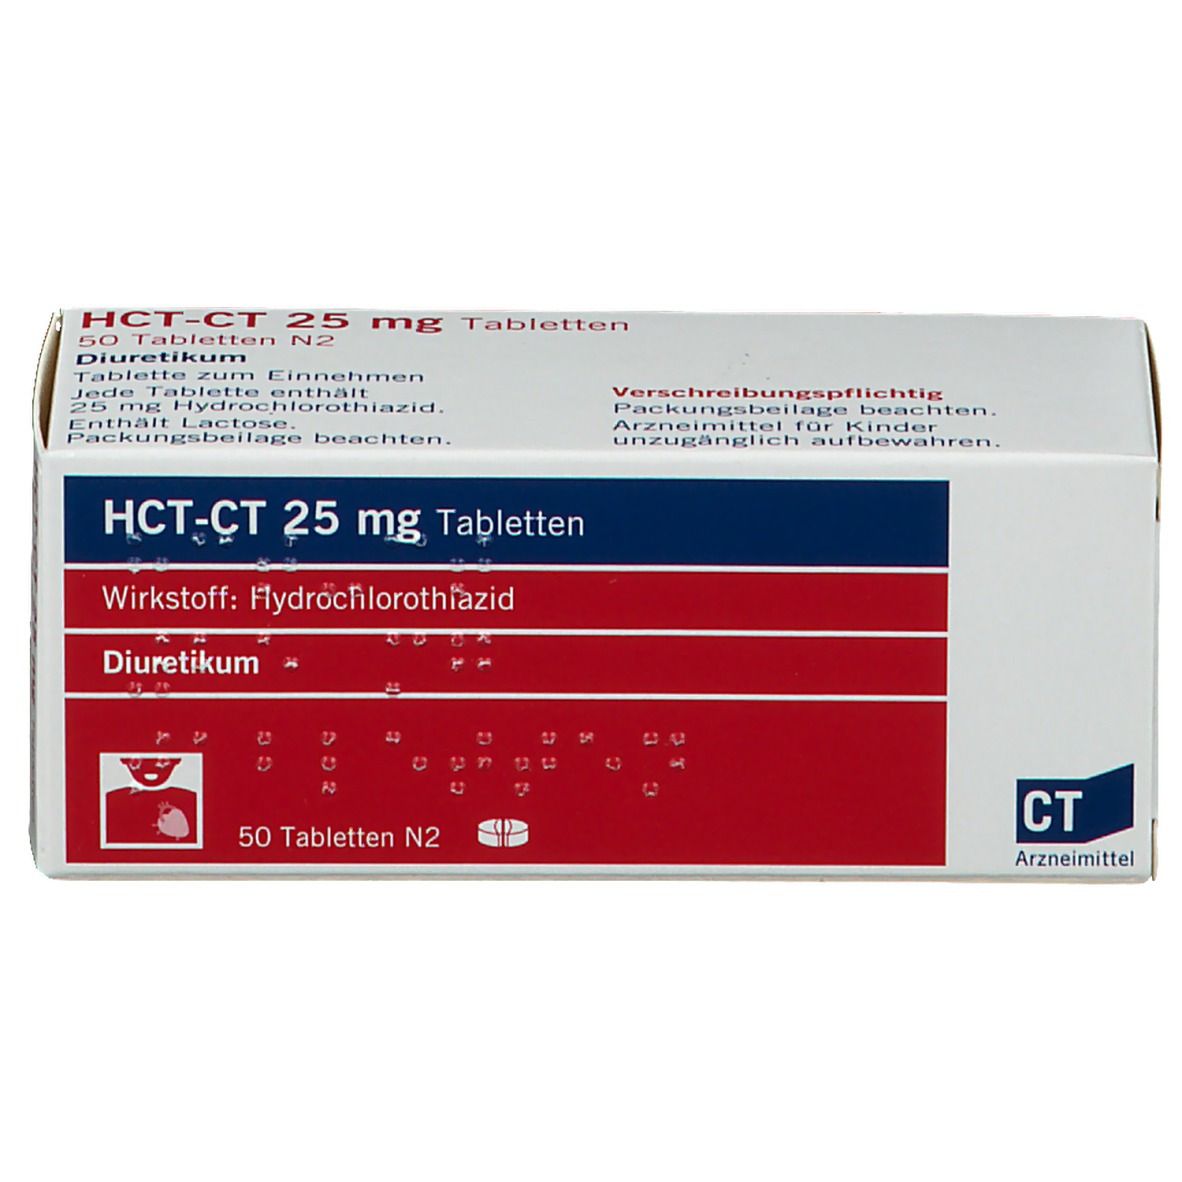 HCT-CT 25 mg